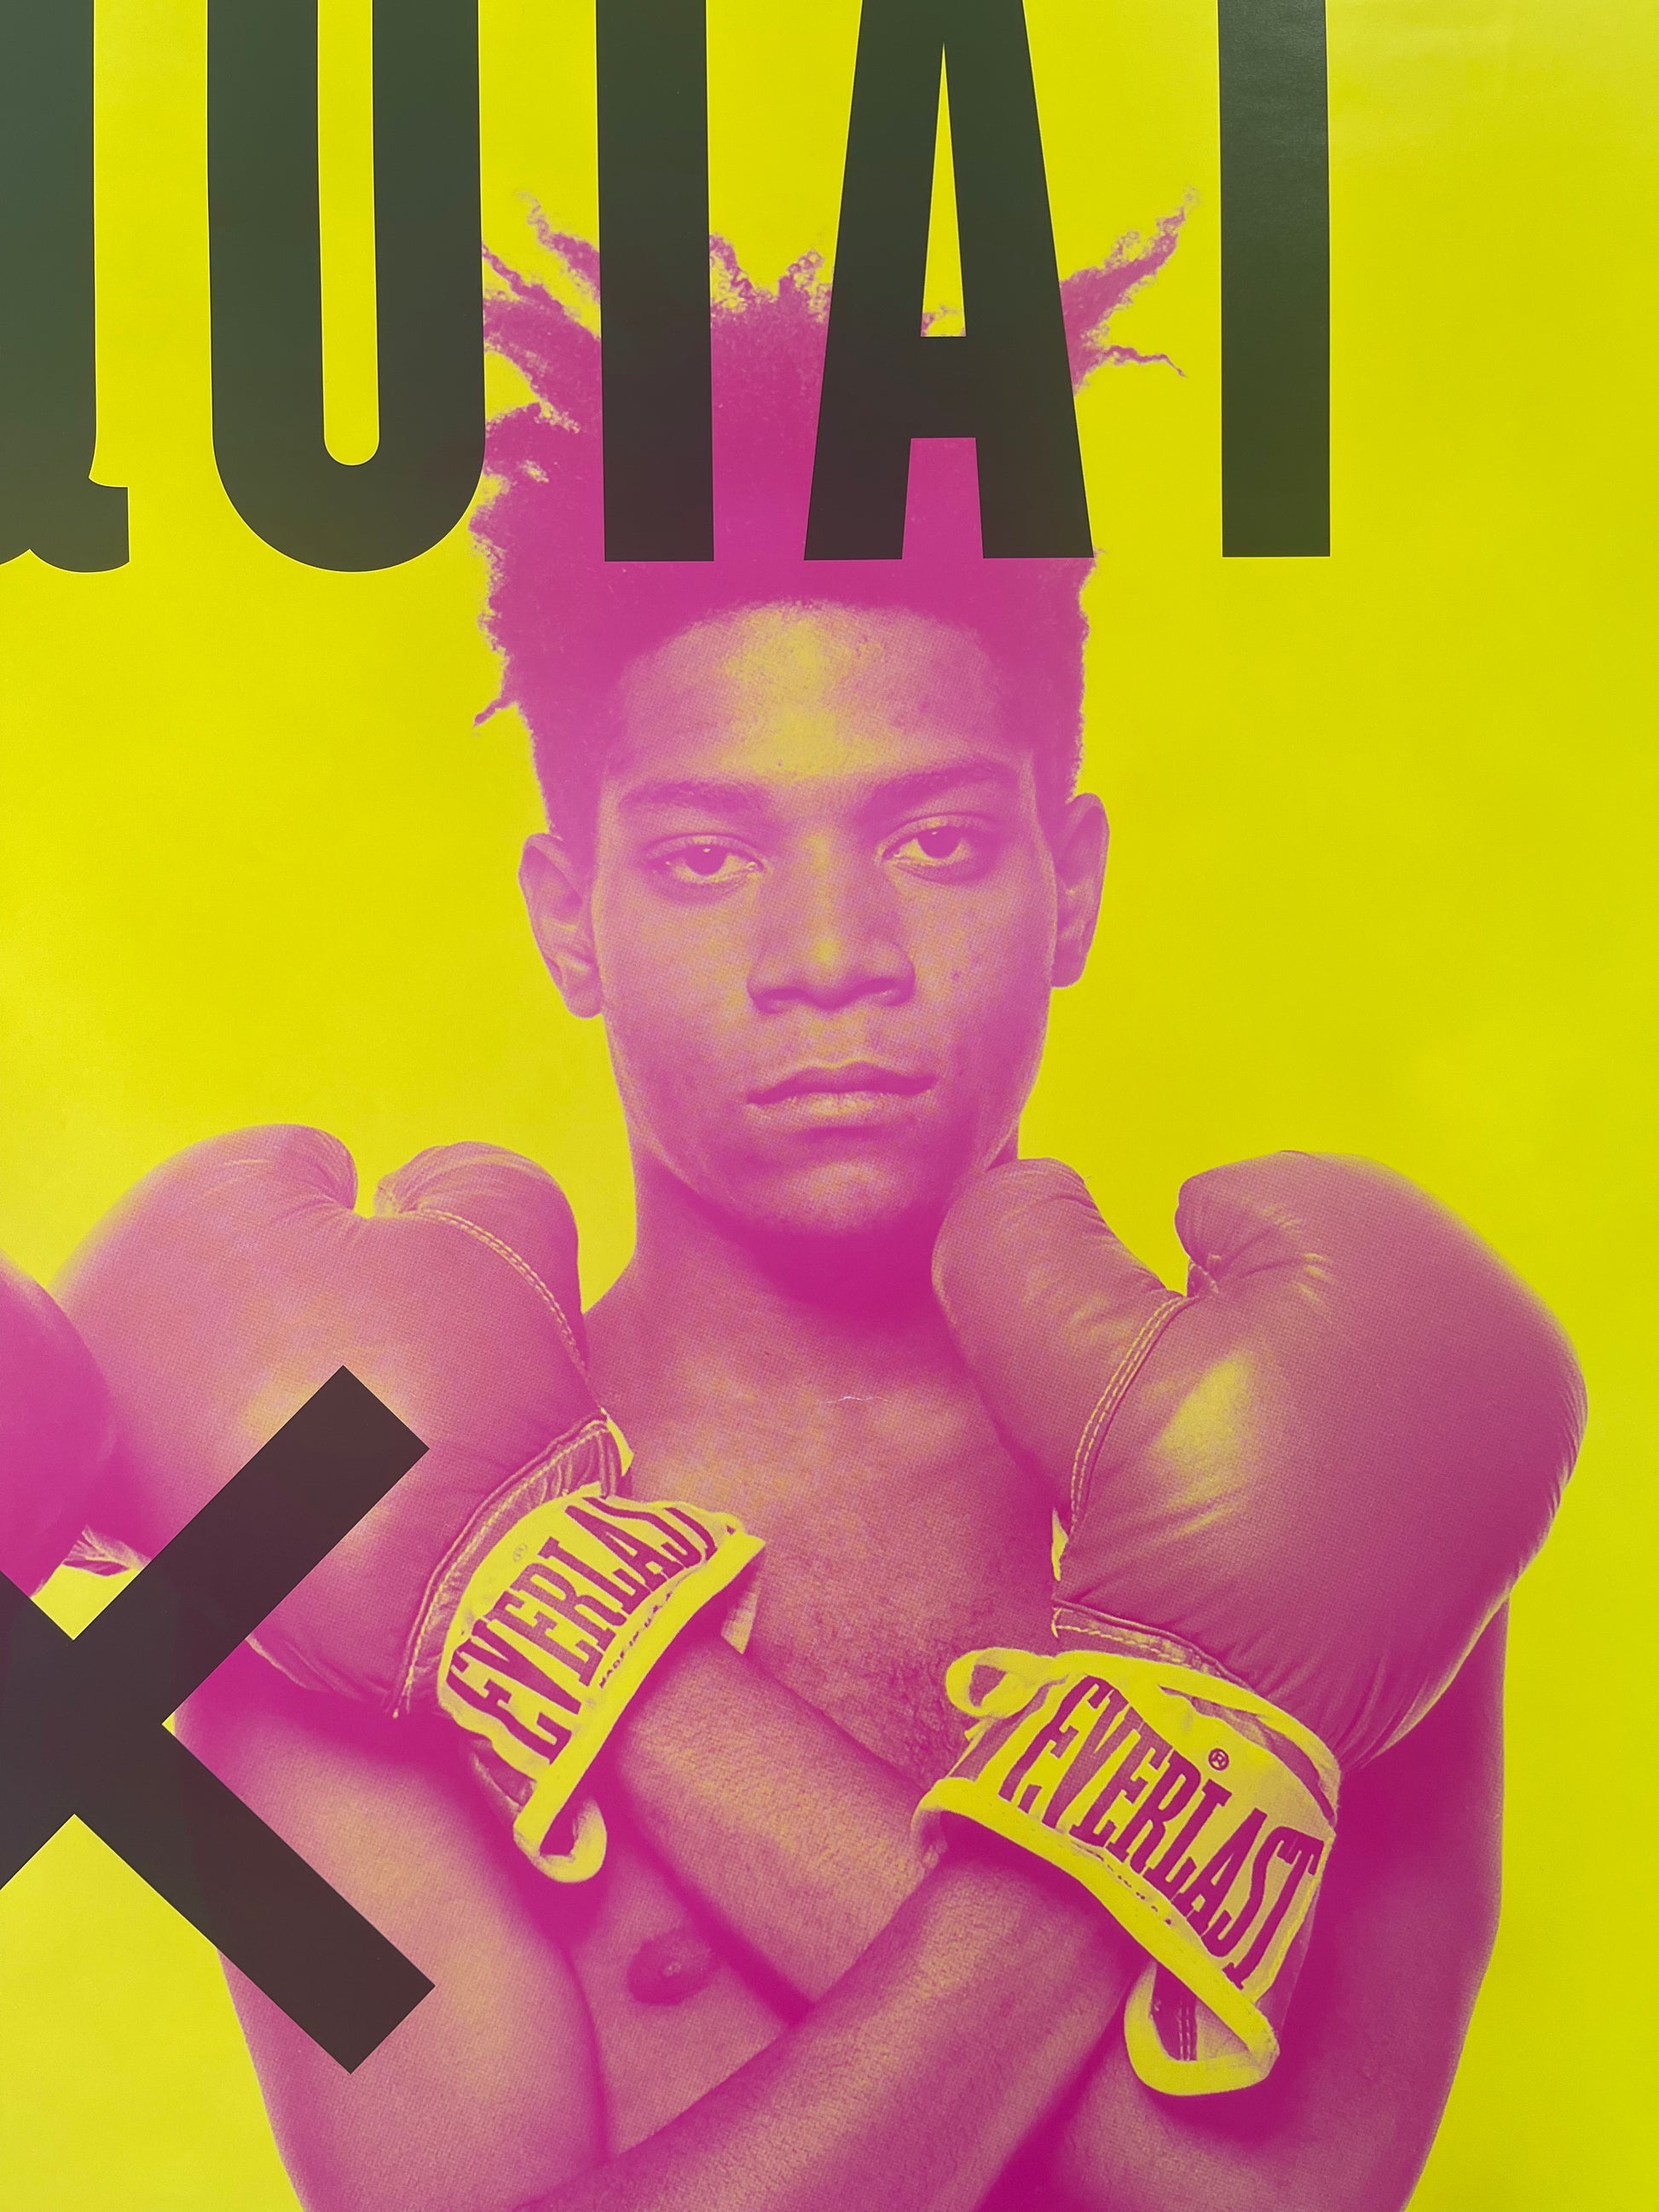 Basquiat x Warhol Exhibition Poster – Vintage Posters